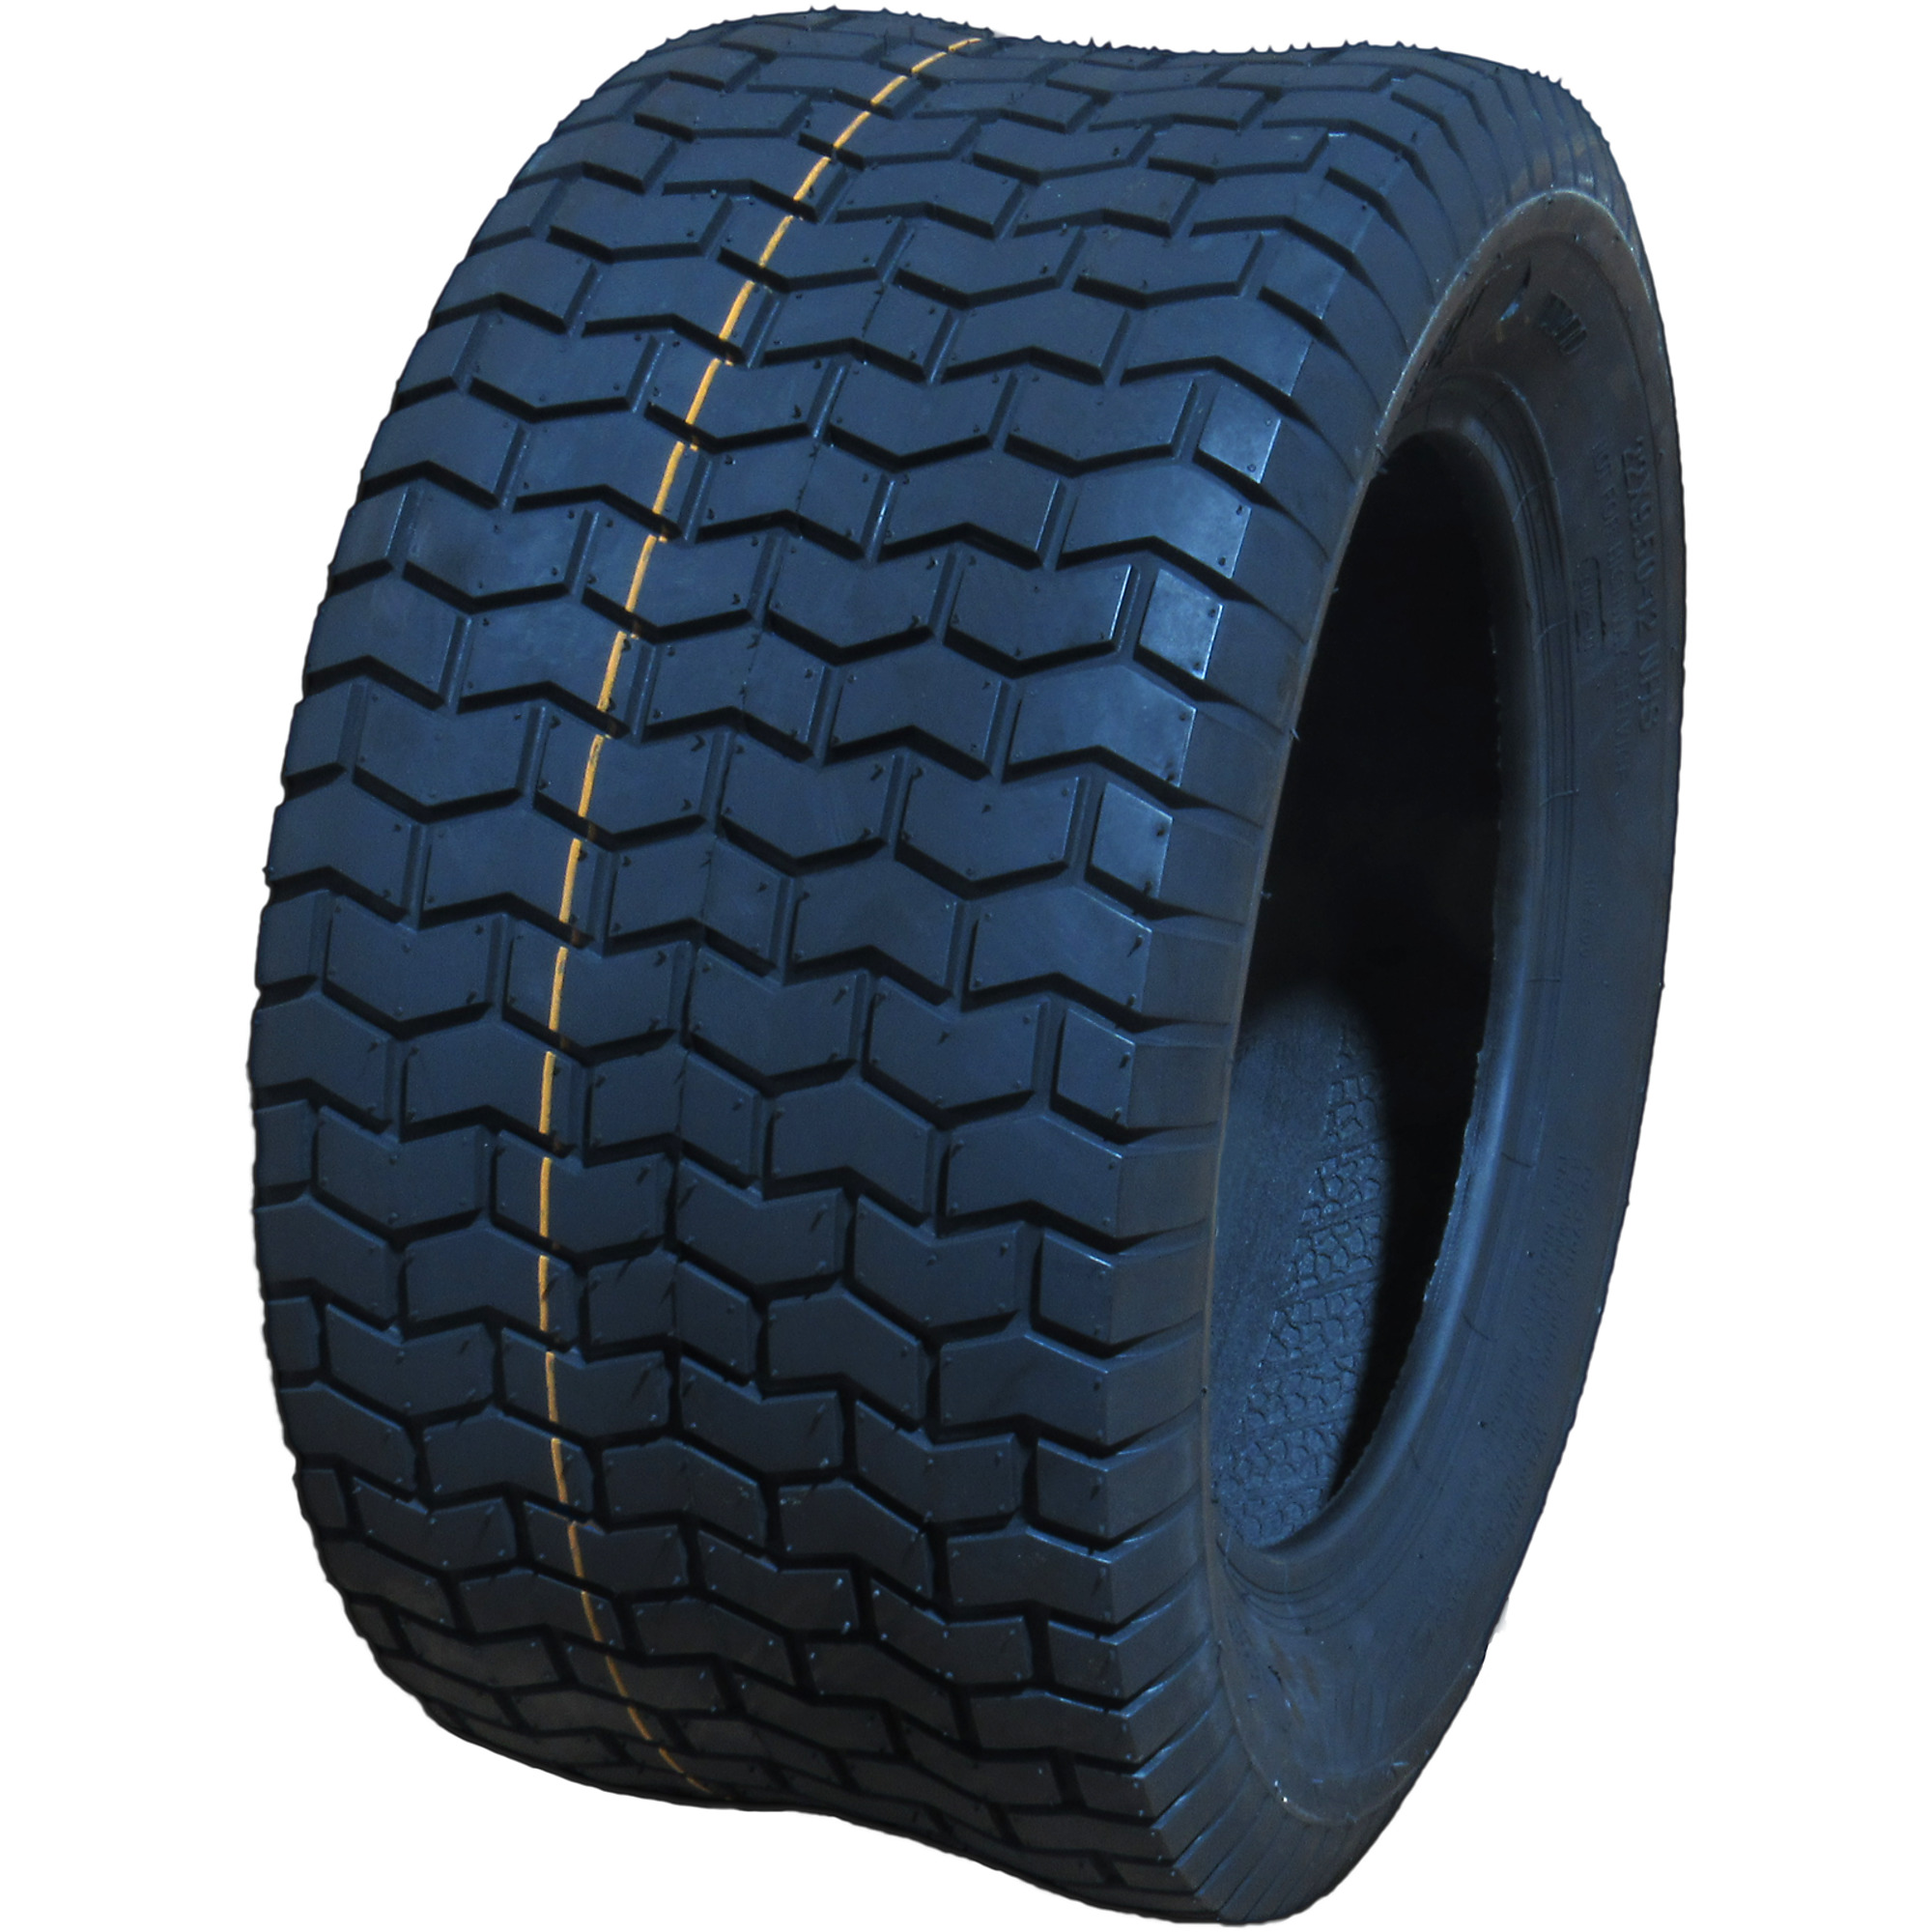 HI-RUN, Lawn Garden Tire, SU12 Turf II, Tire Size 22X9.5-12 Load Range Rating A, Model WD1282